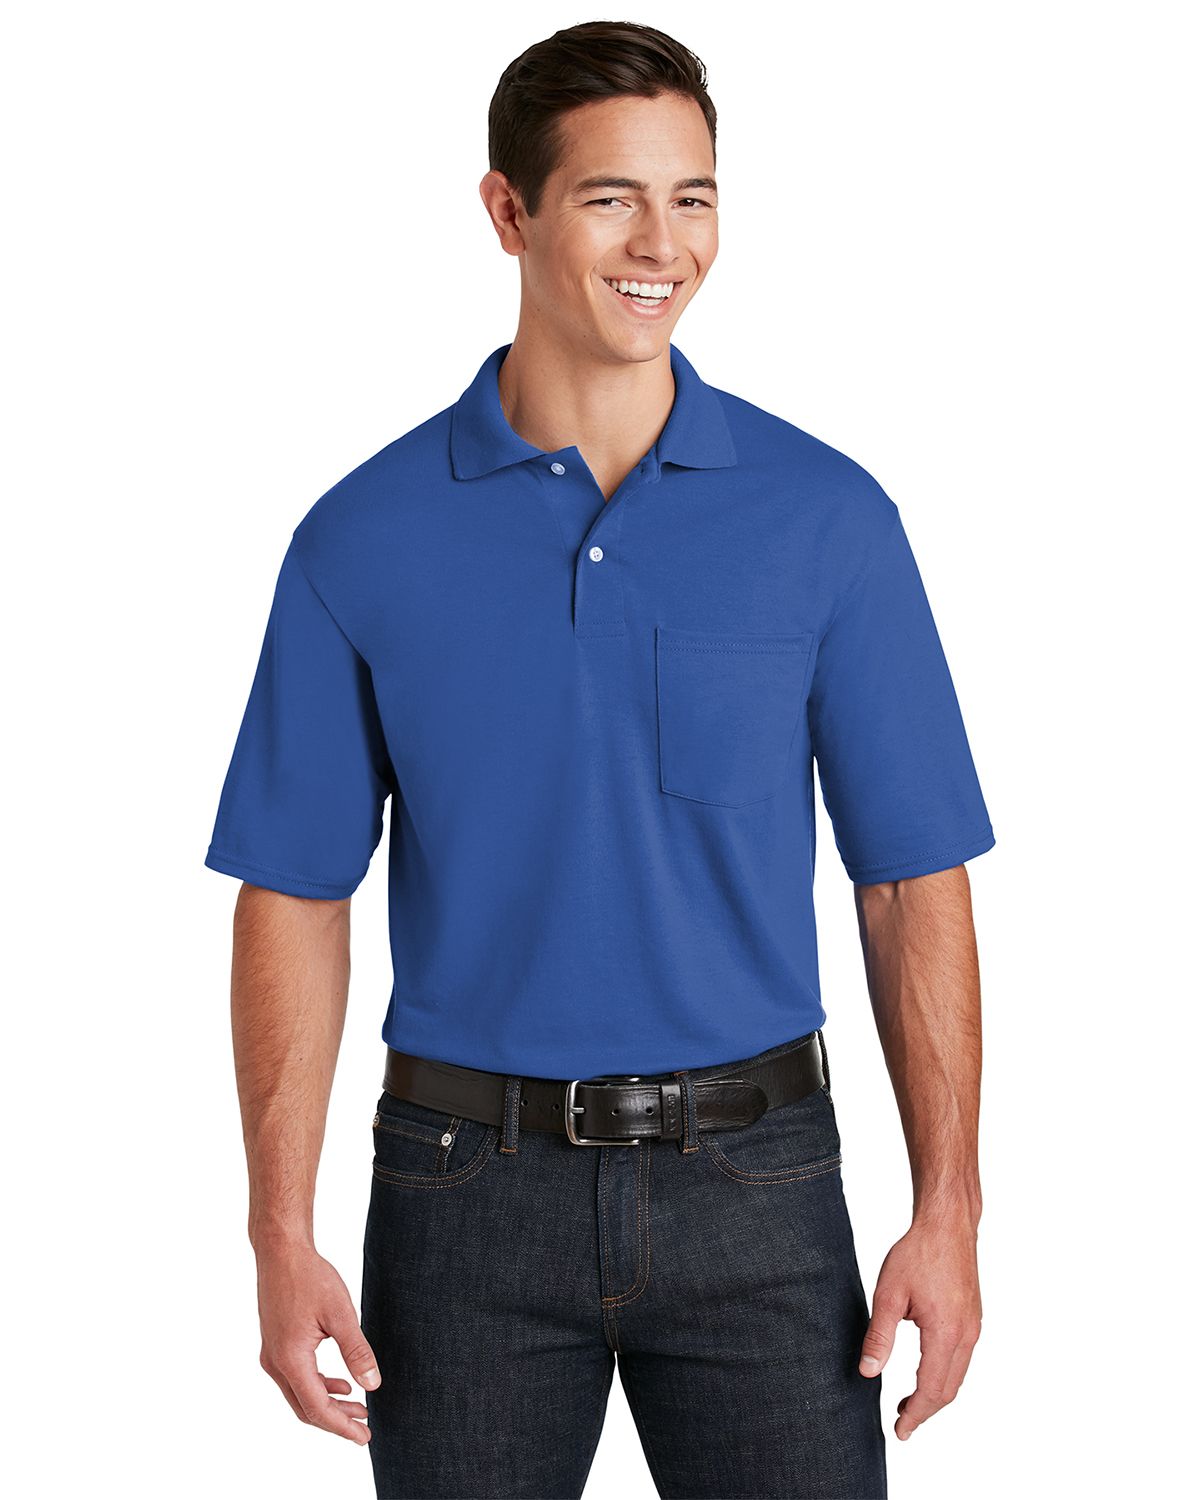 Jerzees 436MP SpotShield Jersey Knit Sport Shirt with Pocket